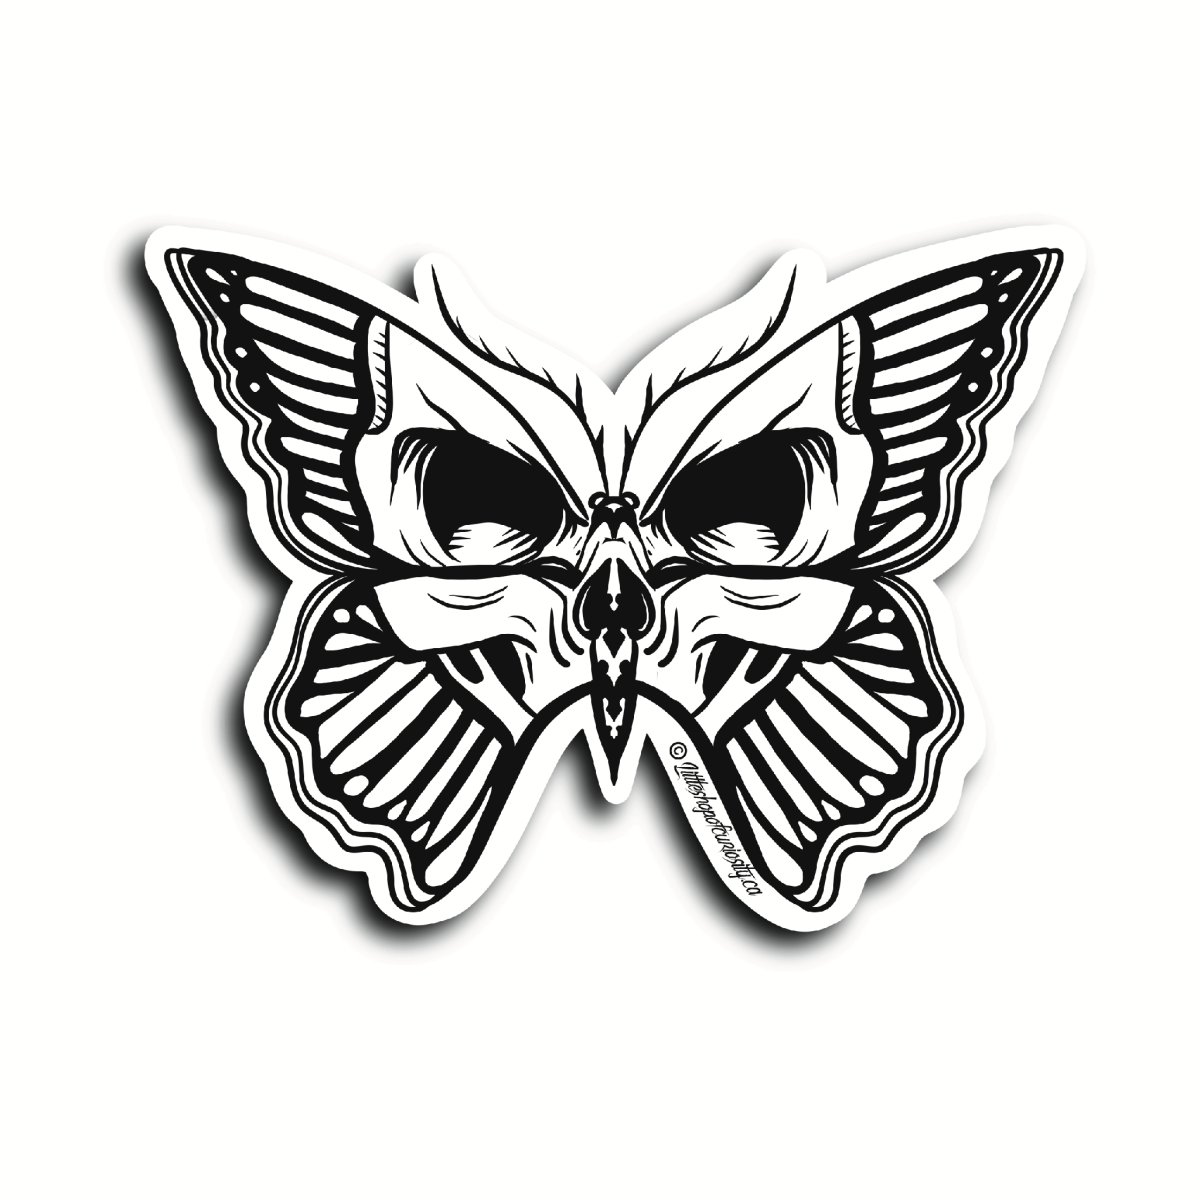 Skull Butterfly Sticker - Black & White Sticker - Little Shop of Curiosity